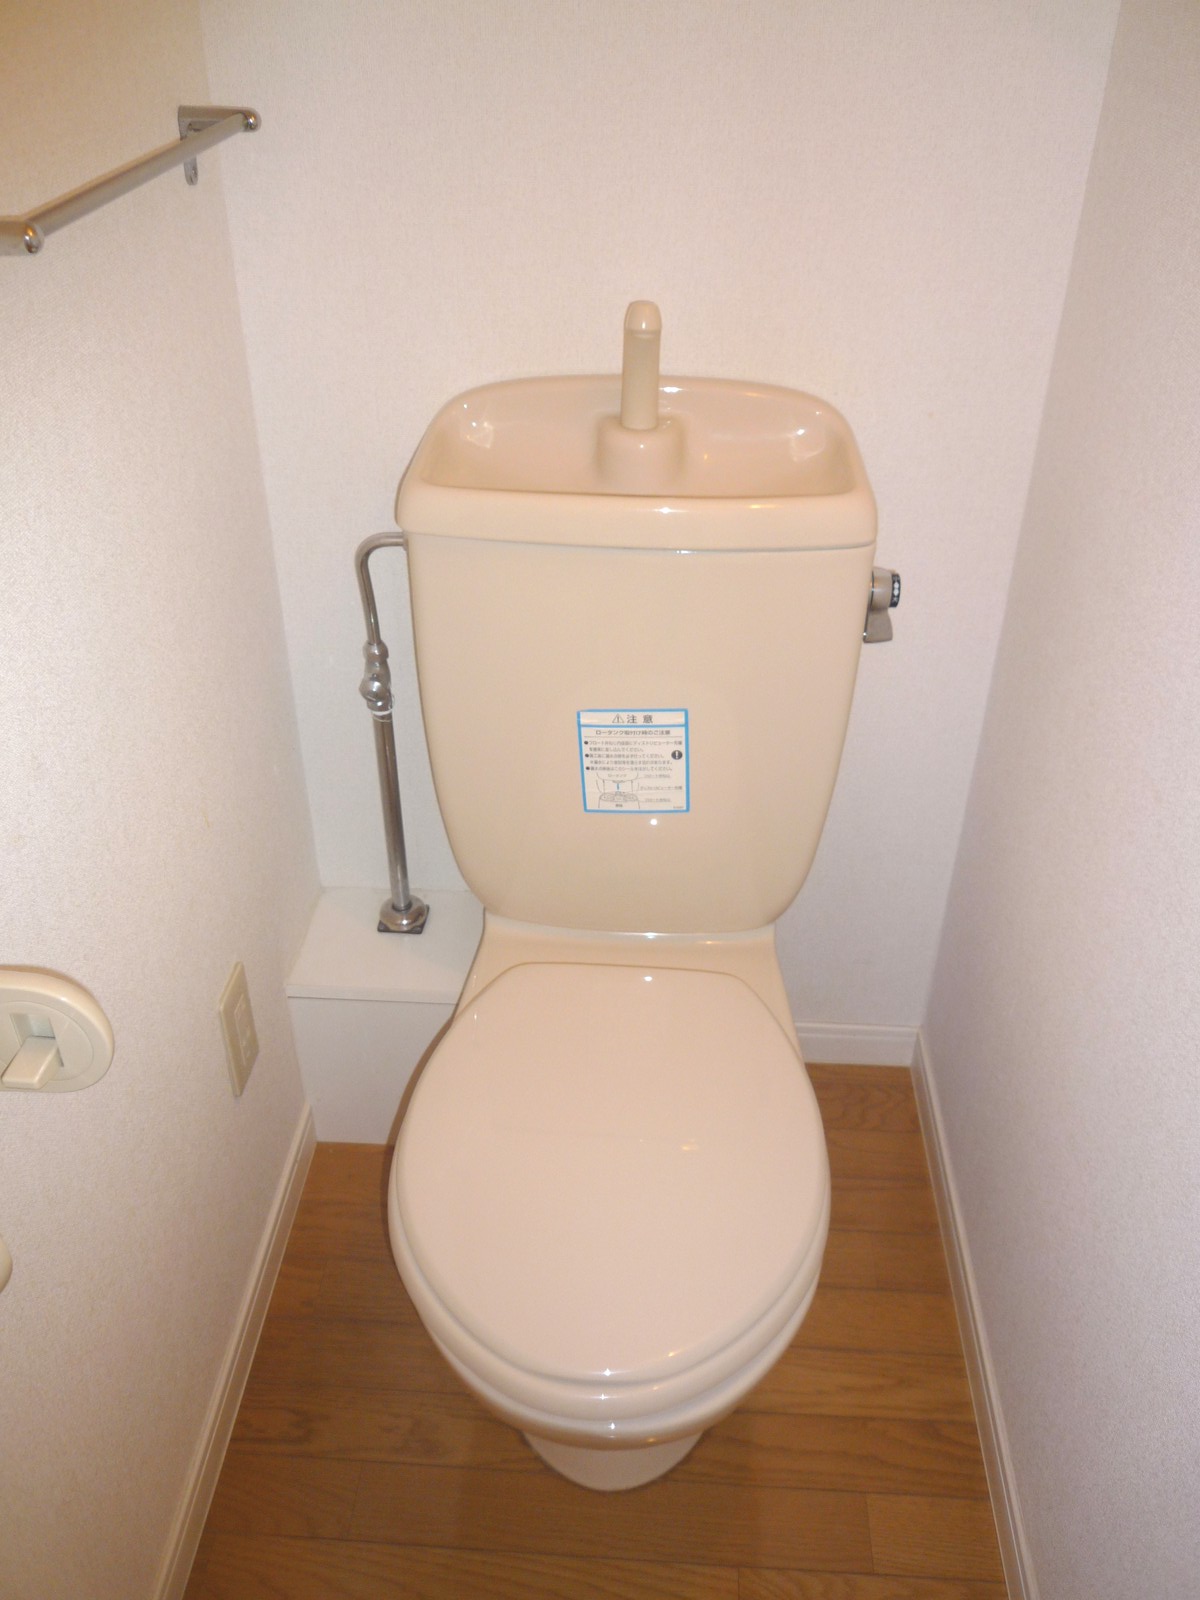 Toilet. I am glad separate toilet